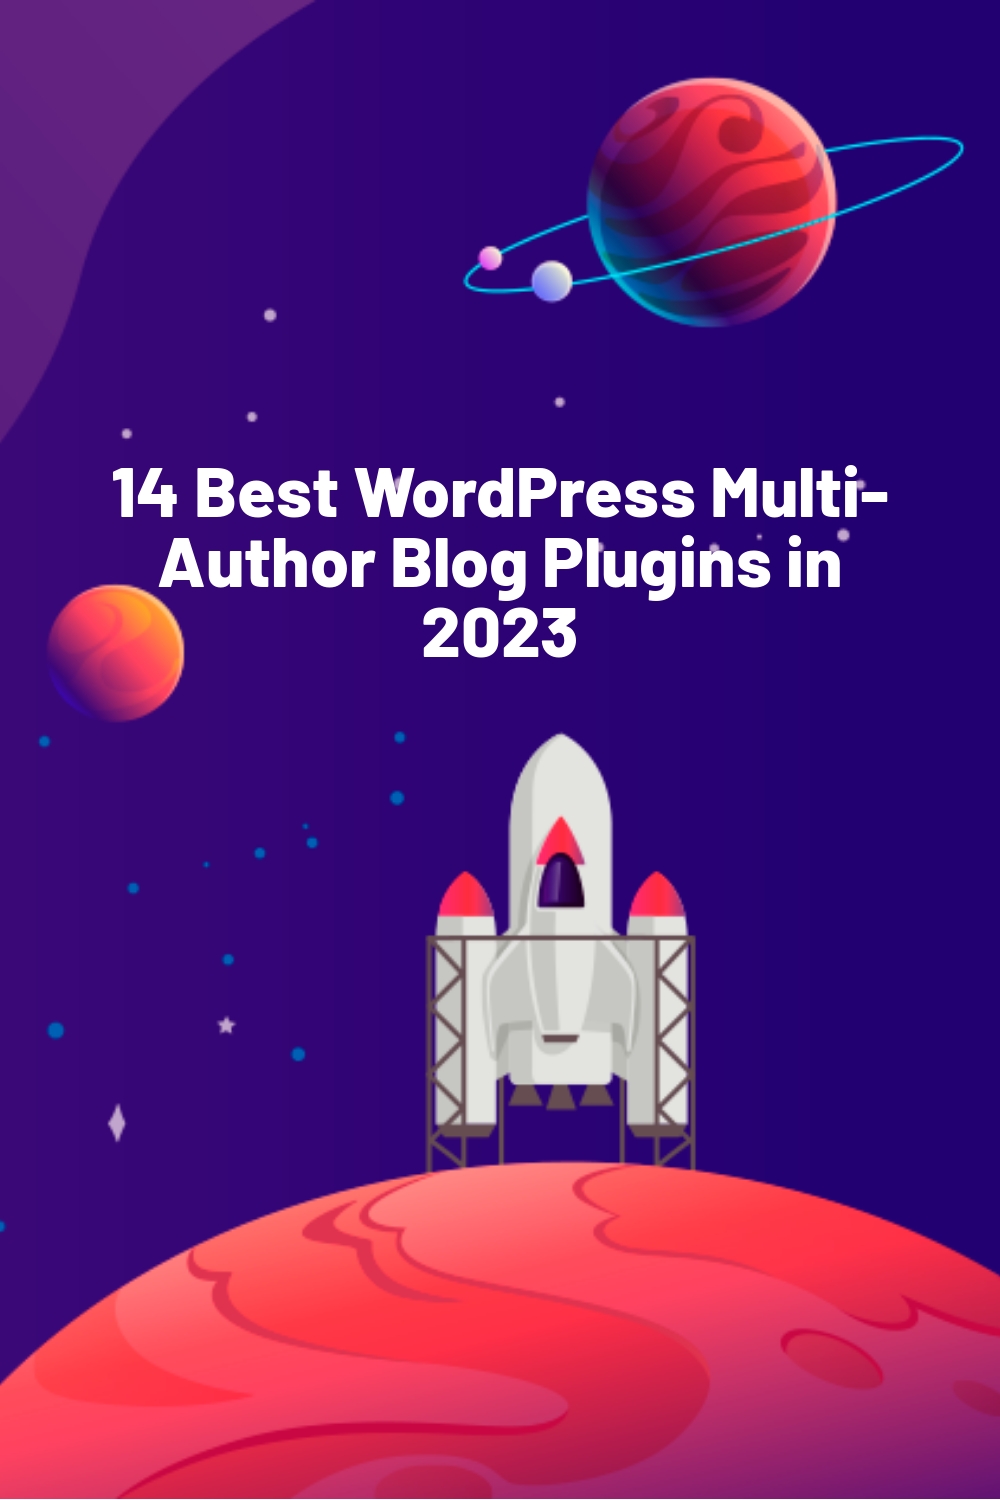 14 Best WordPress Multi-Author Blog Plugins in 2023